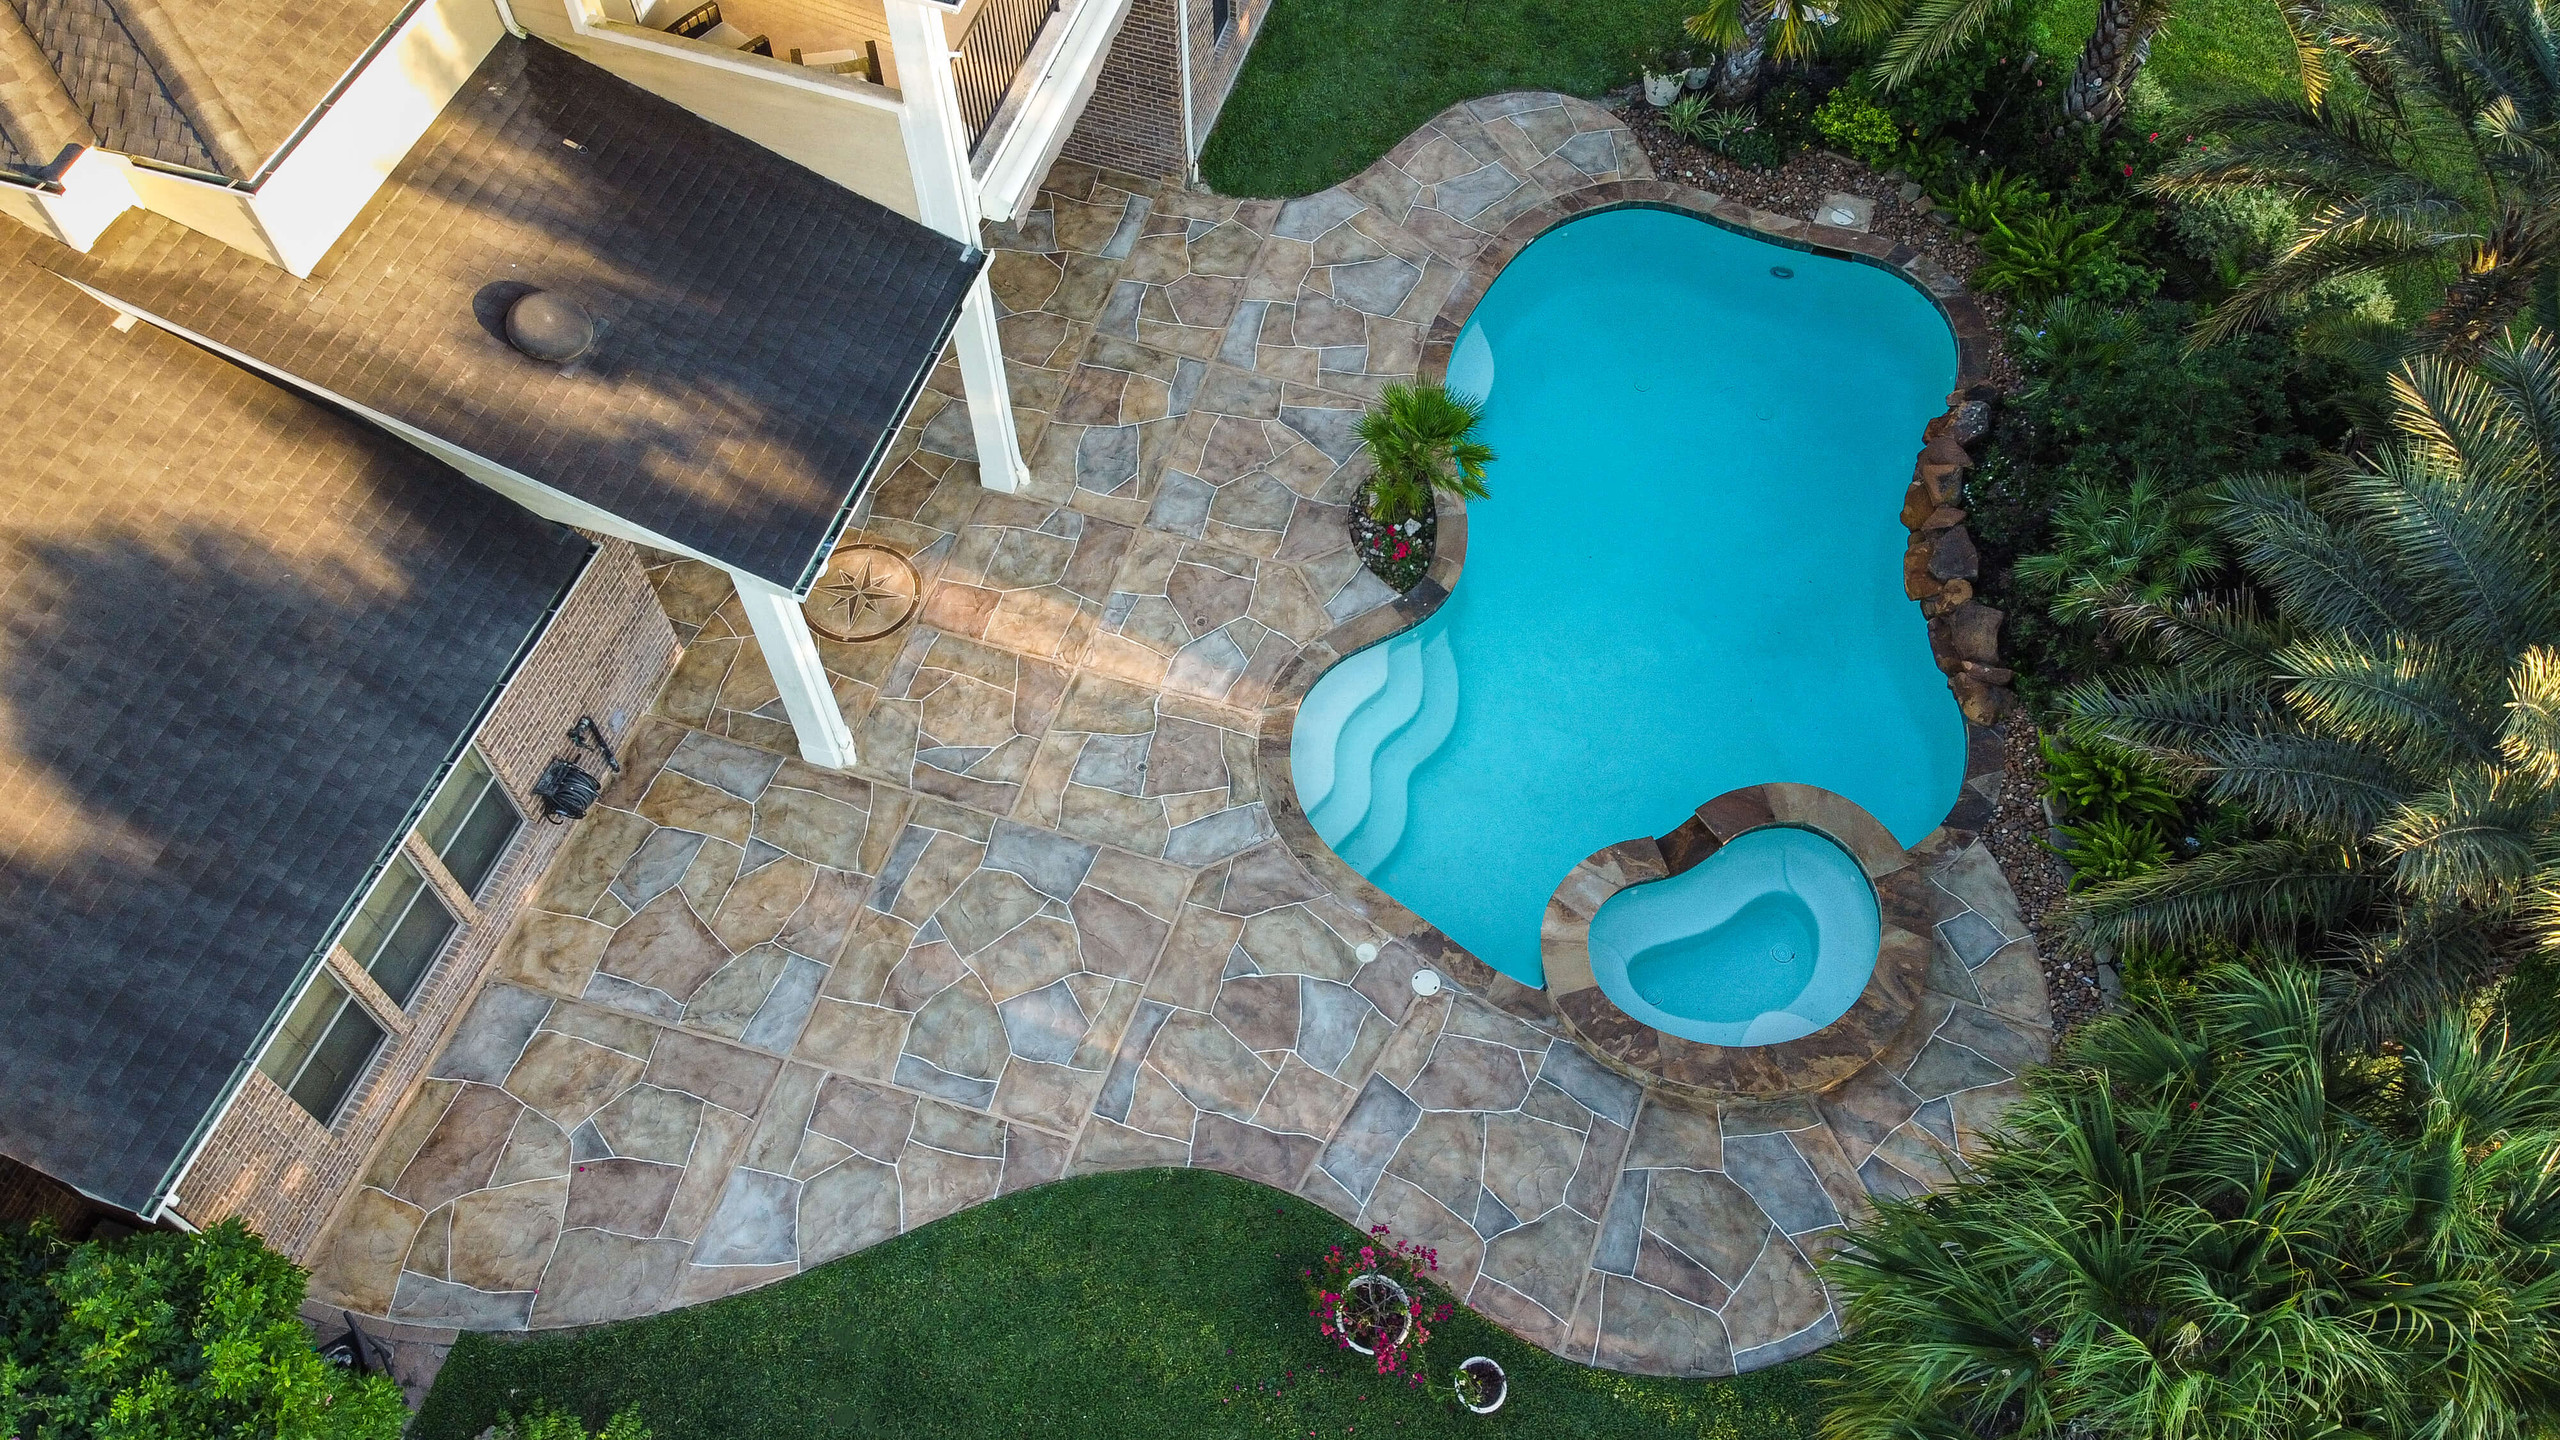 Carvestone around backyard pool to enhance patio design idea